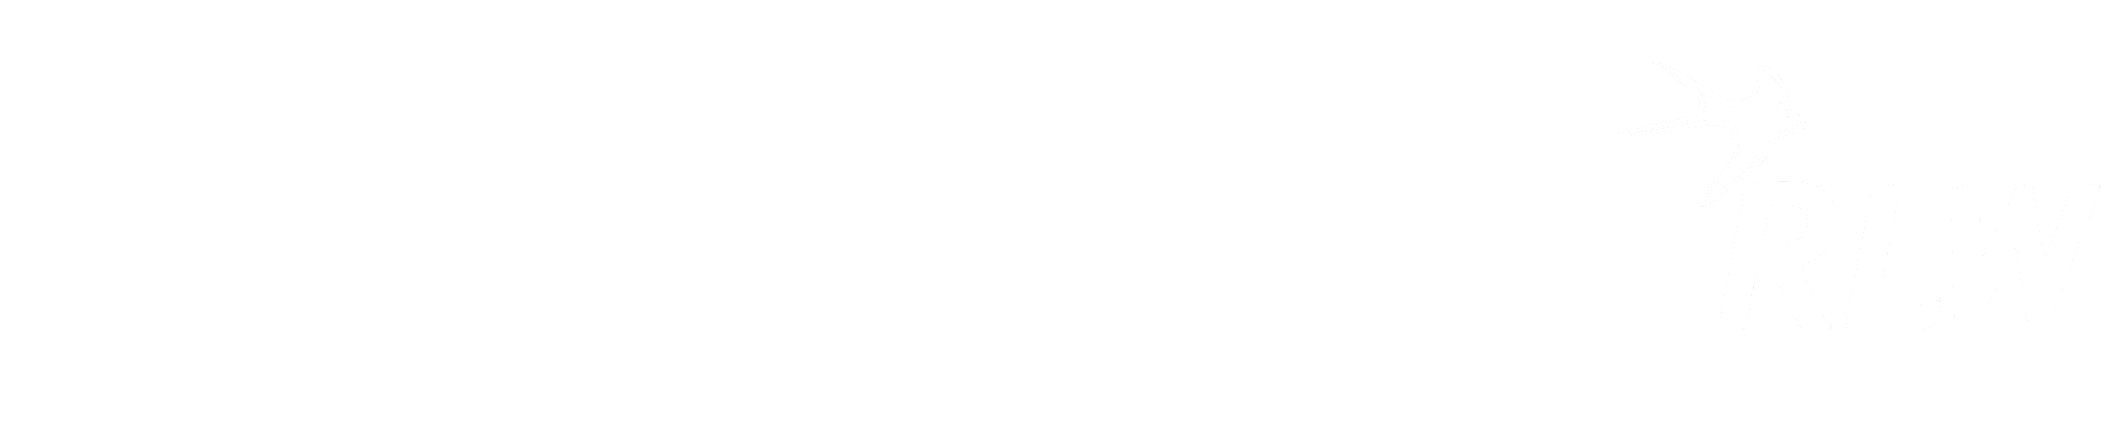 Urban and Civic and RLW logos